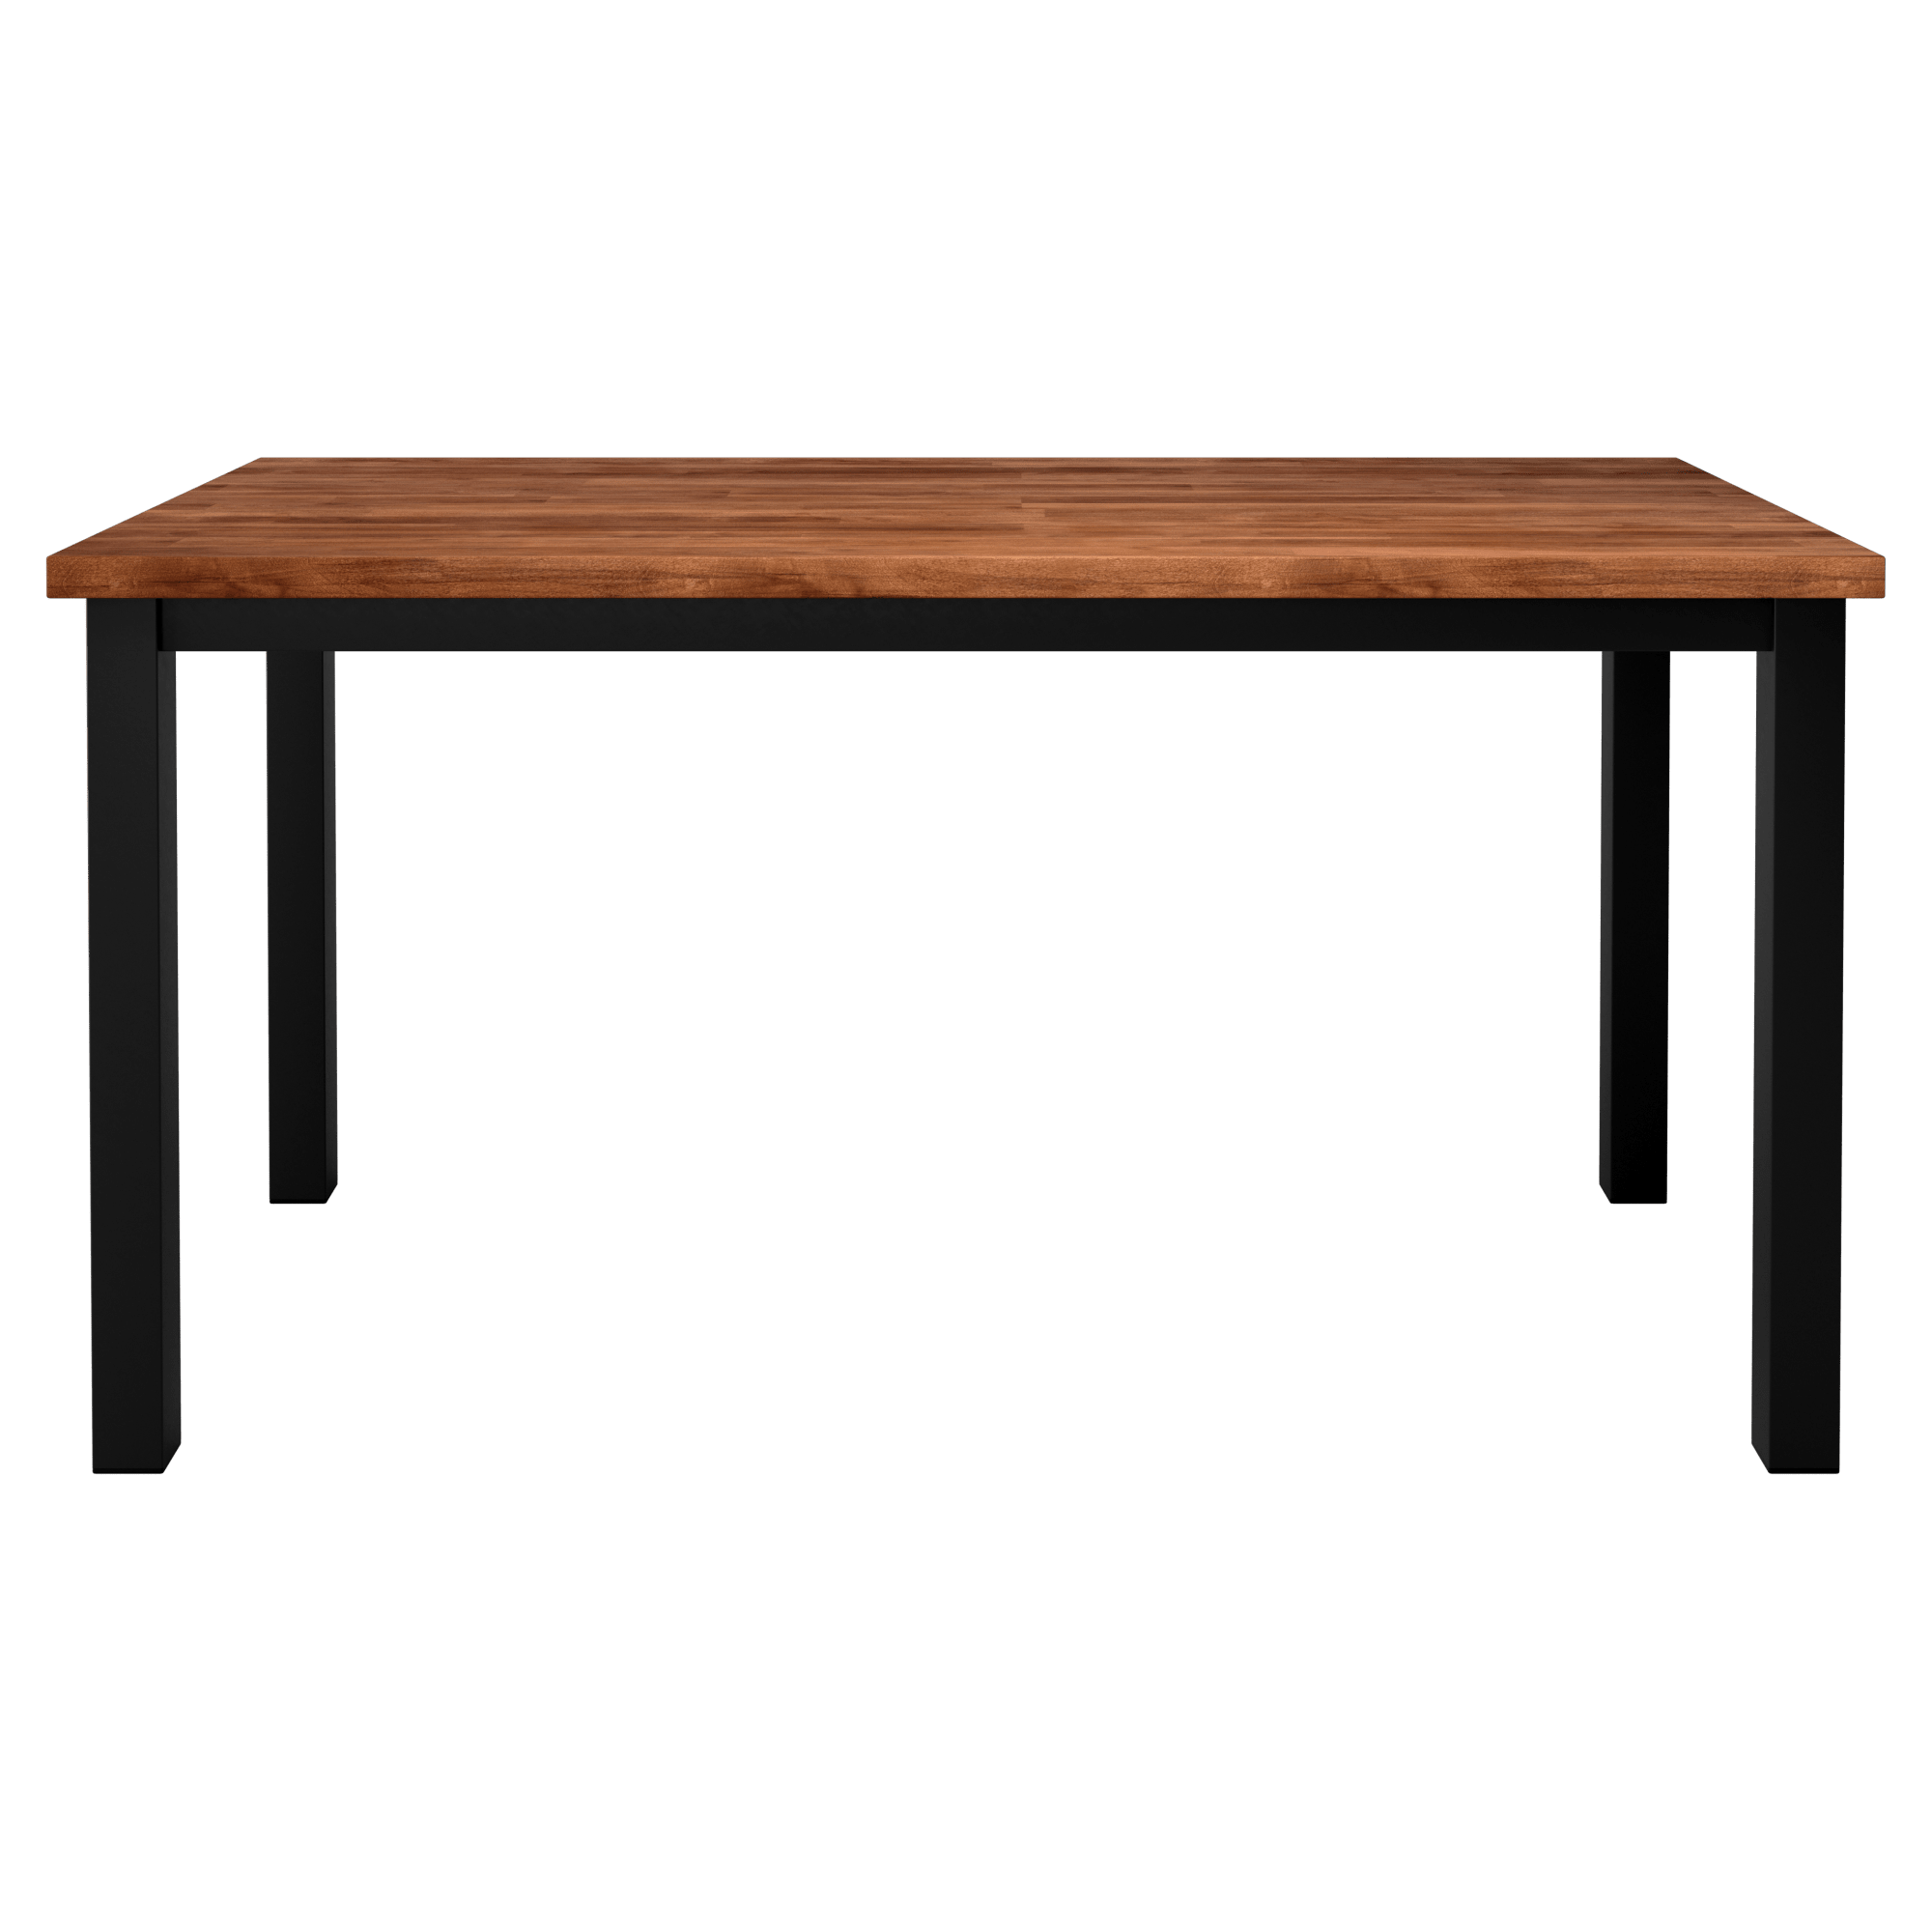 Premium Solid Wood Butcher Block Table Top